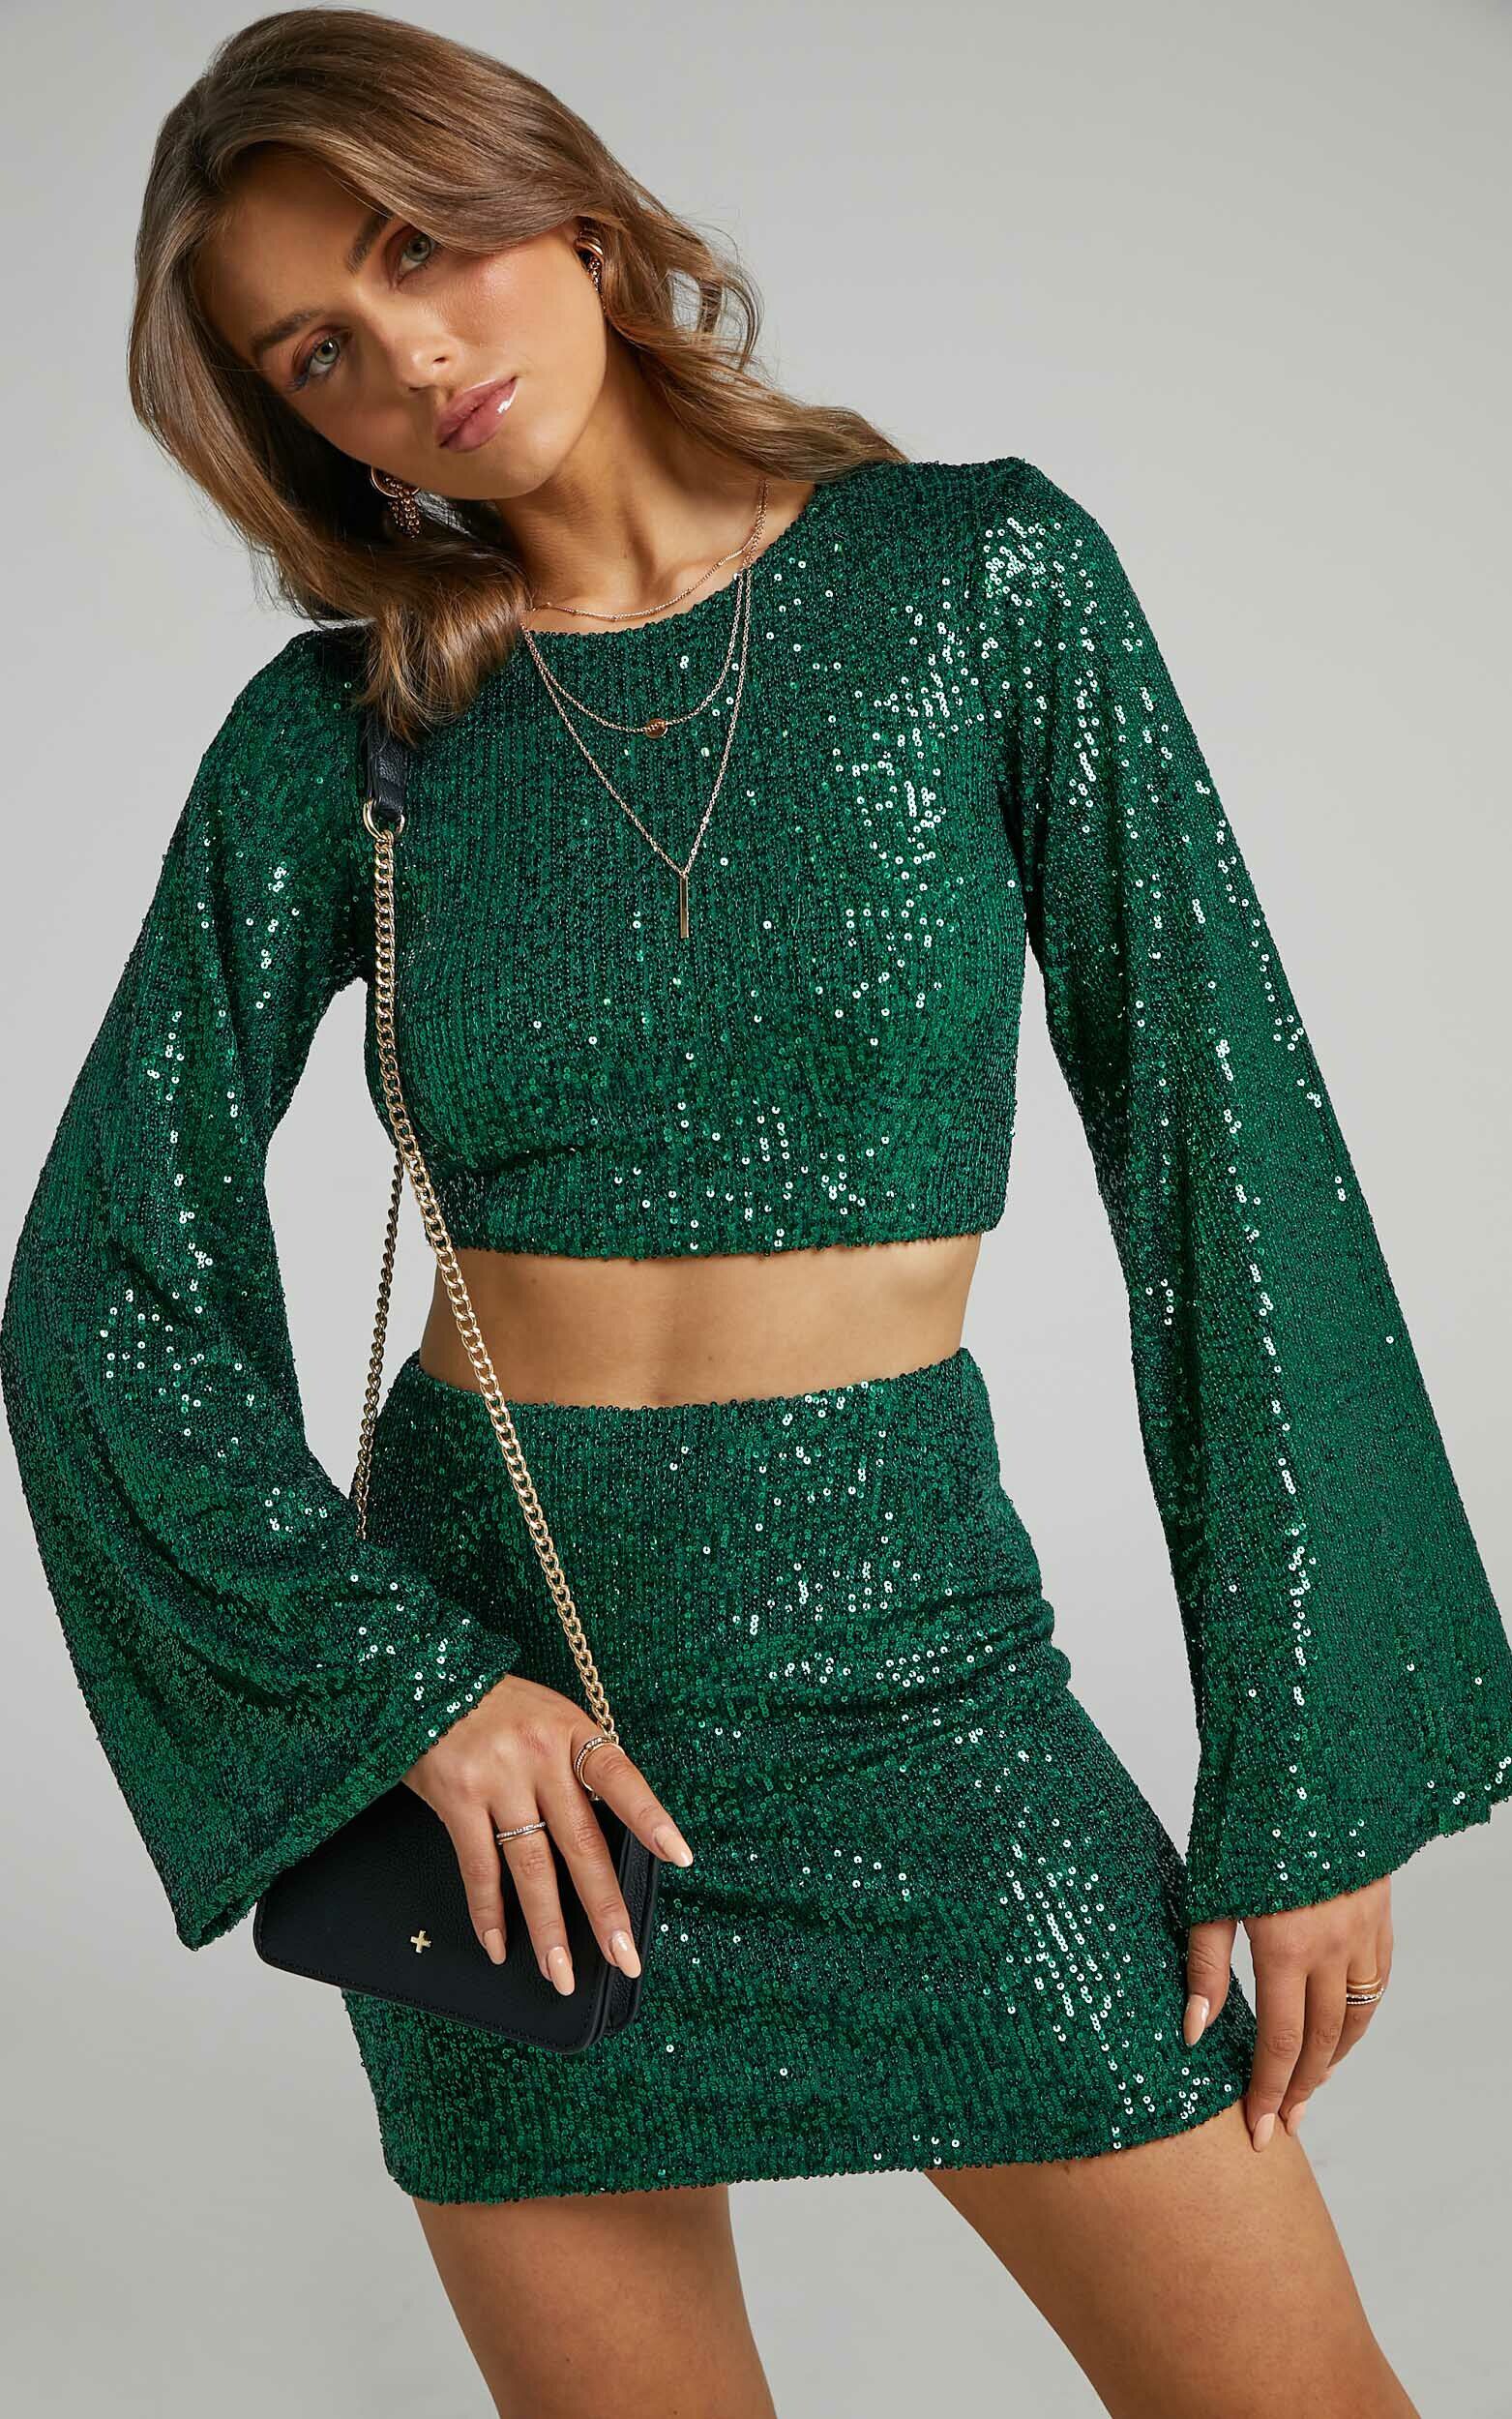 Tianee Mini Skirt in Emerald Sequin - 06, GRN1, super-hi-res image number null